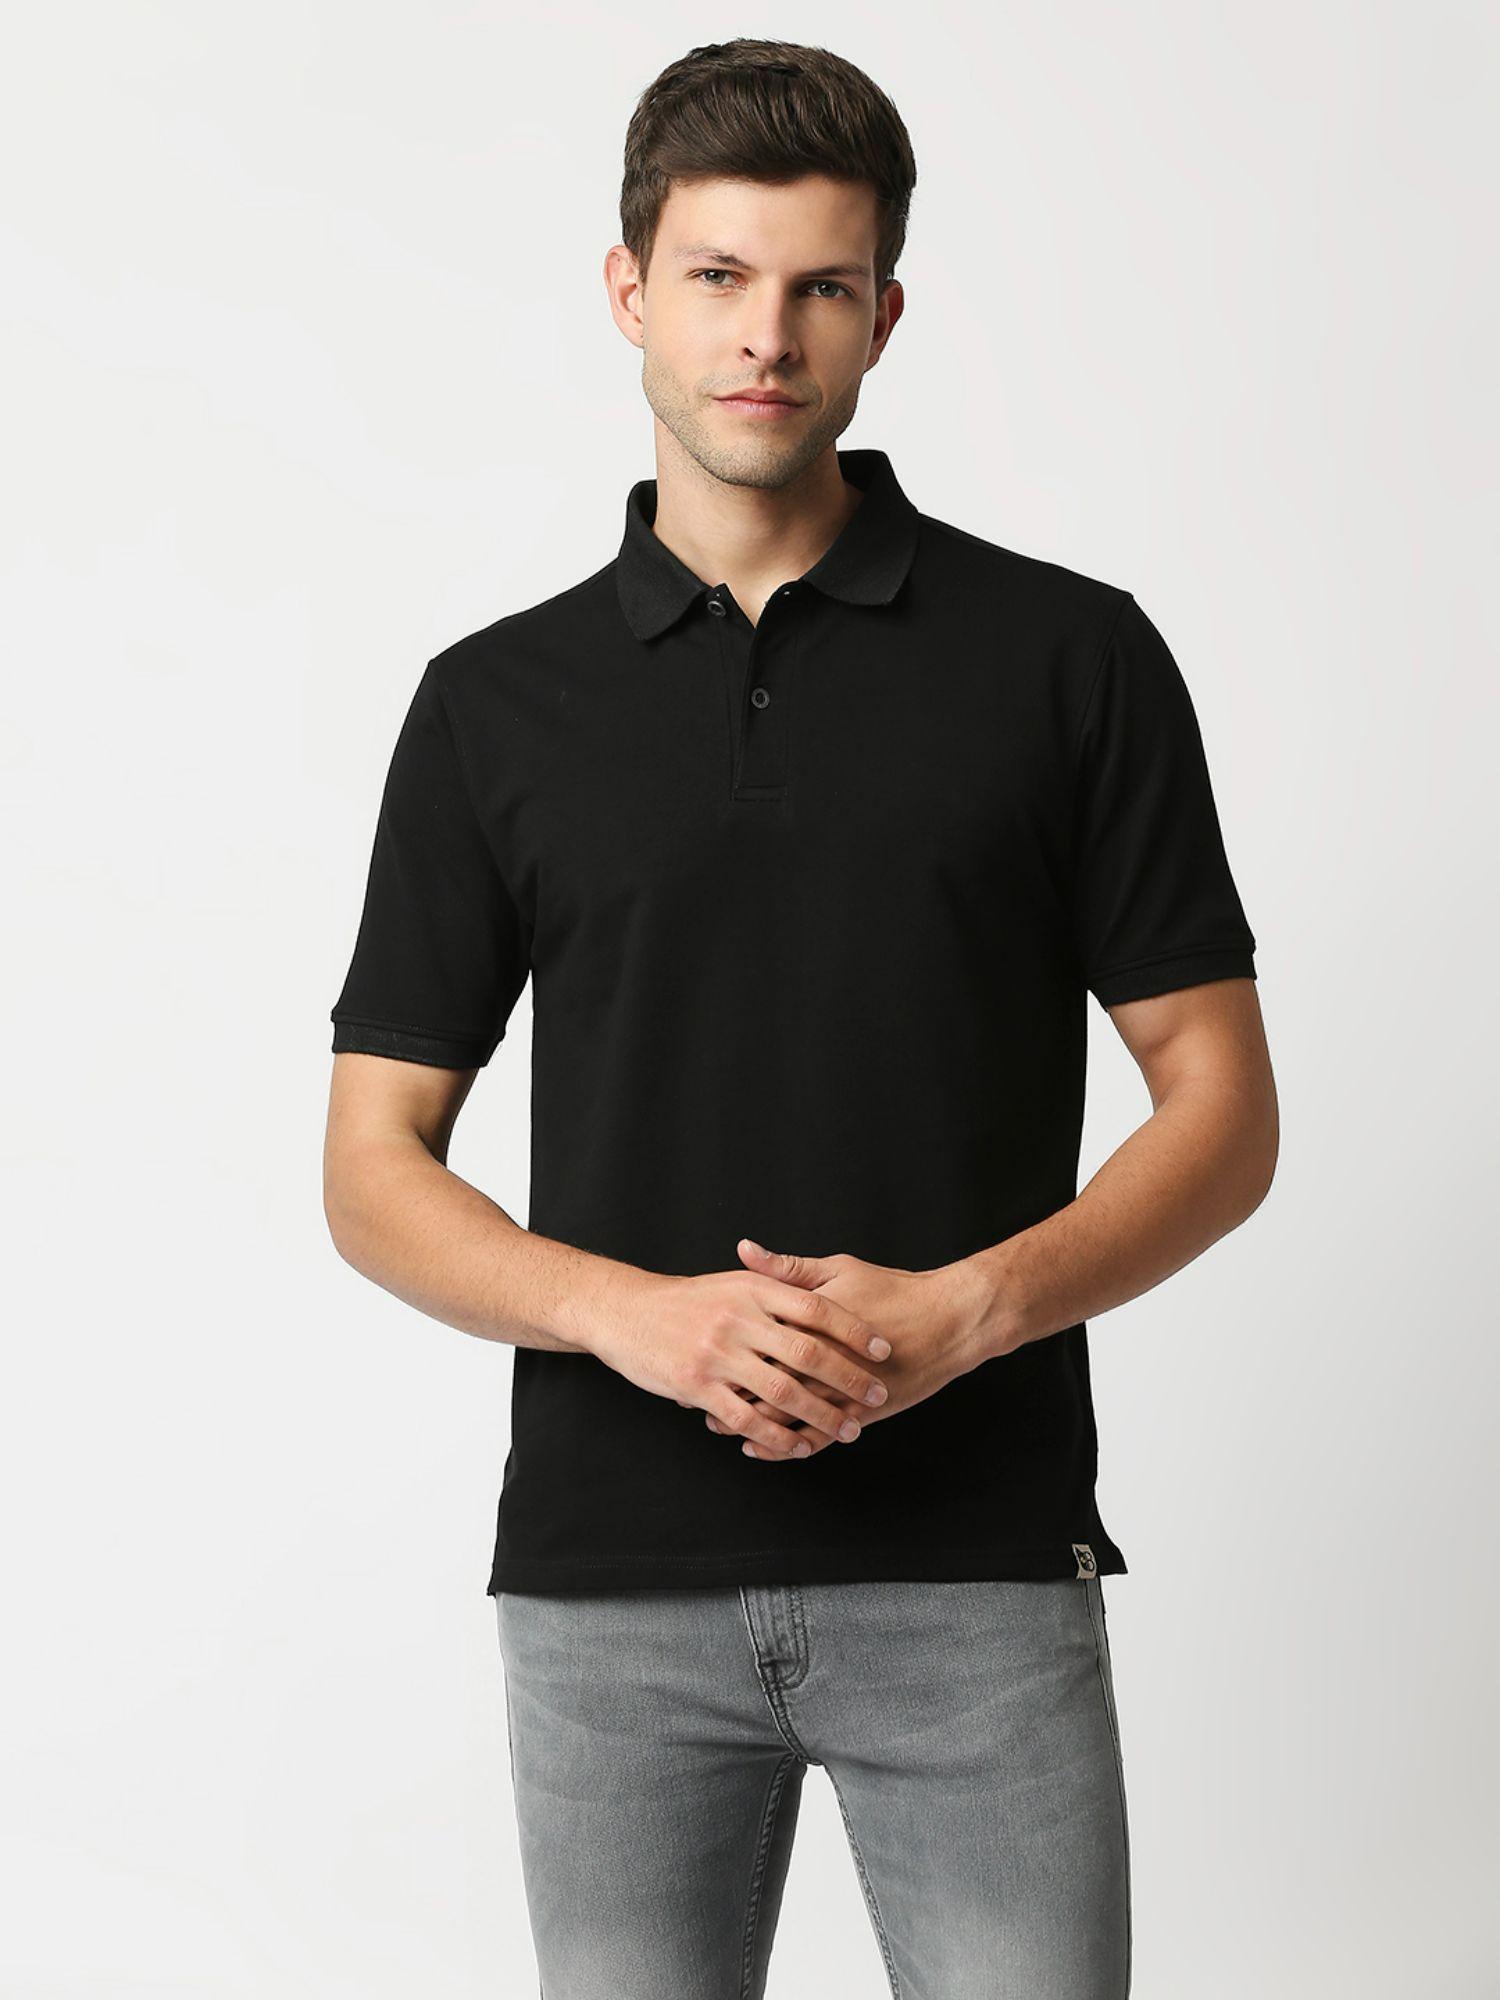 mens polo plain black color t shirt